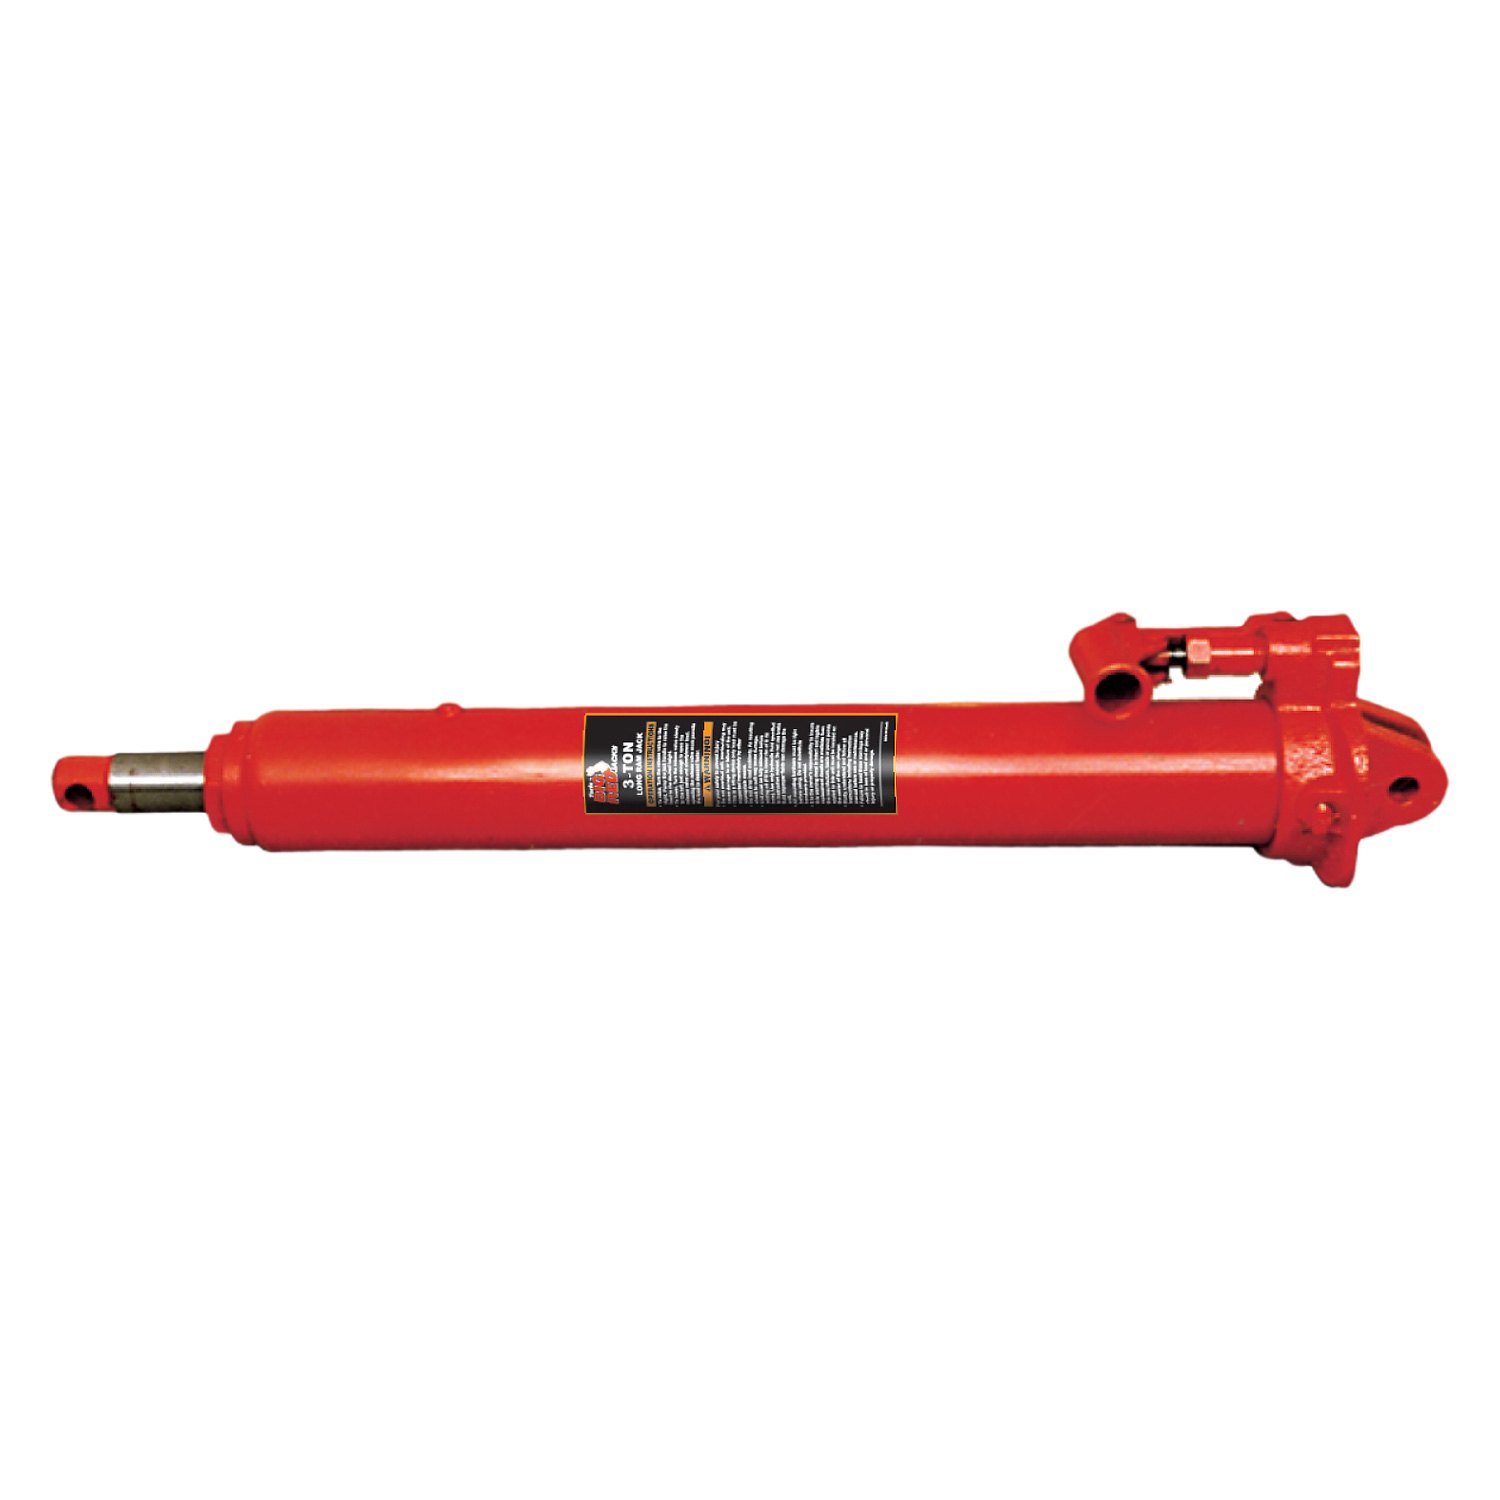 Torin® T30806 Red™ 8 t Long Ram Piston Hydraulic Jack